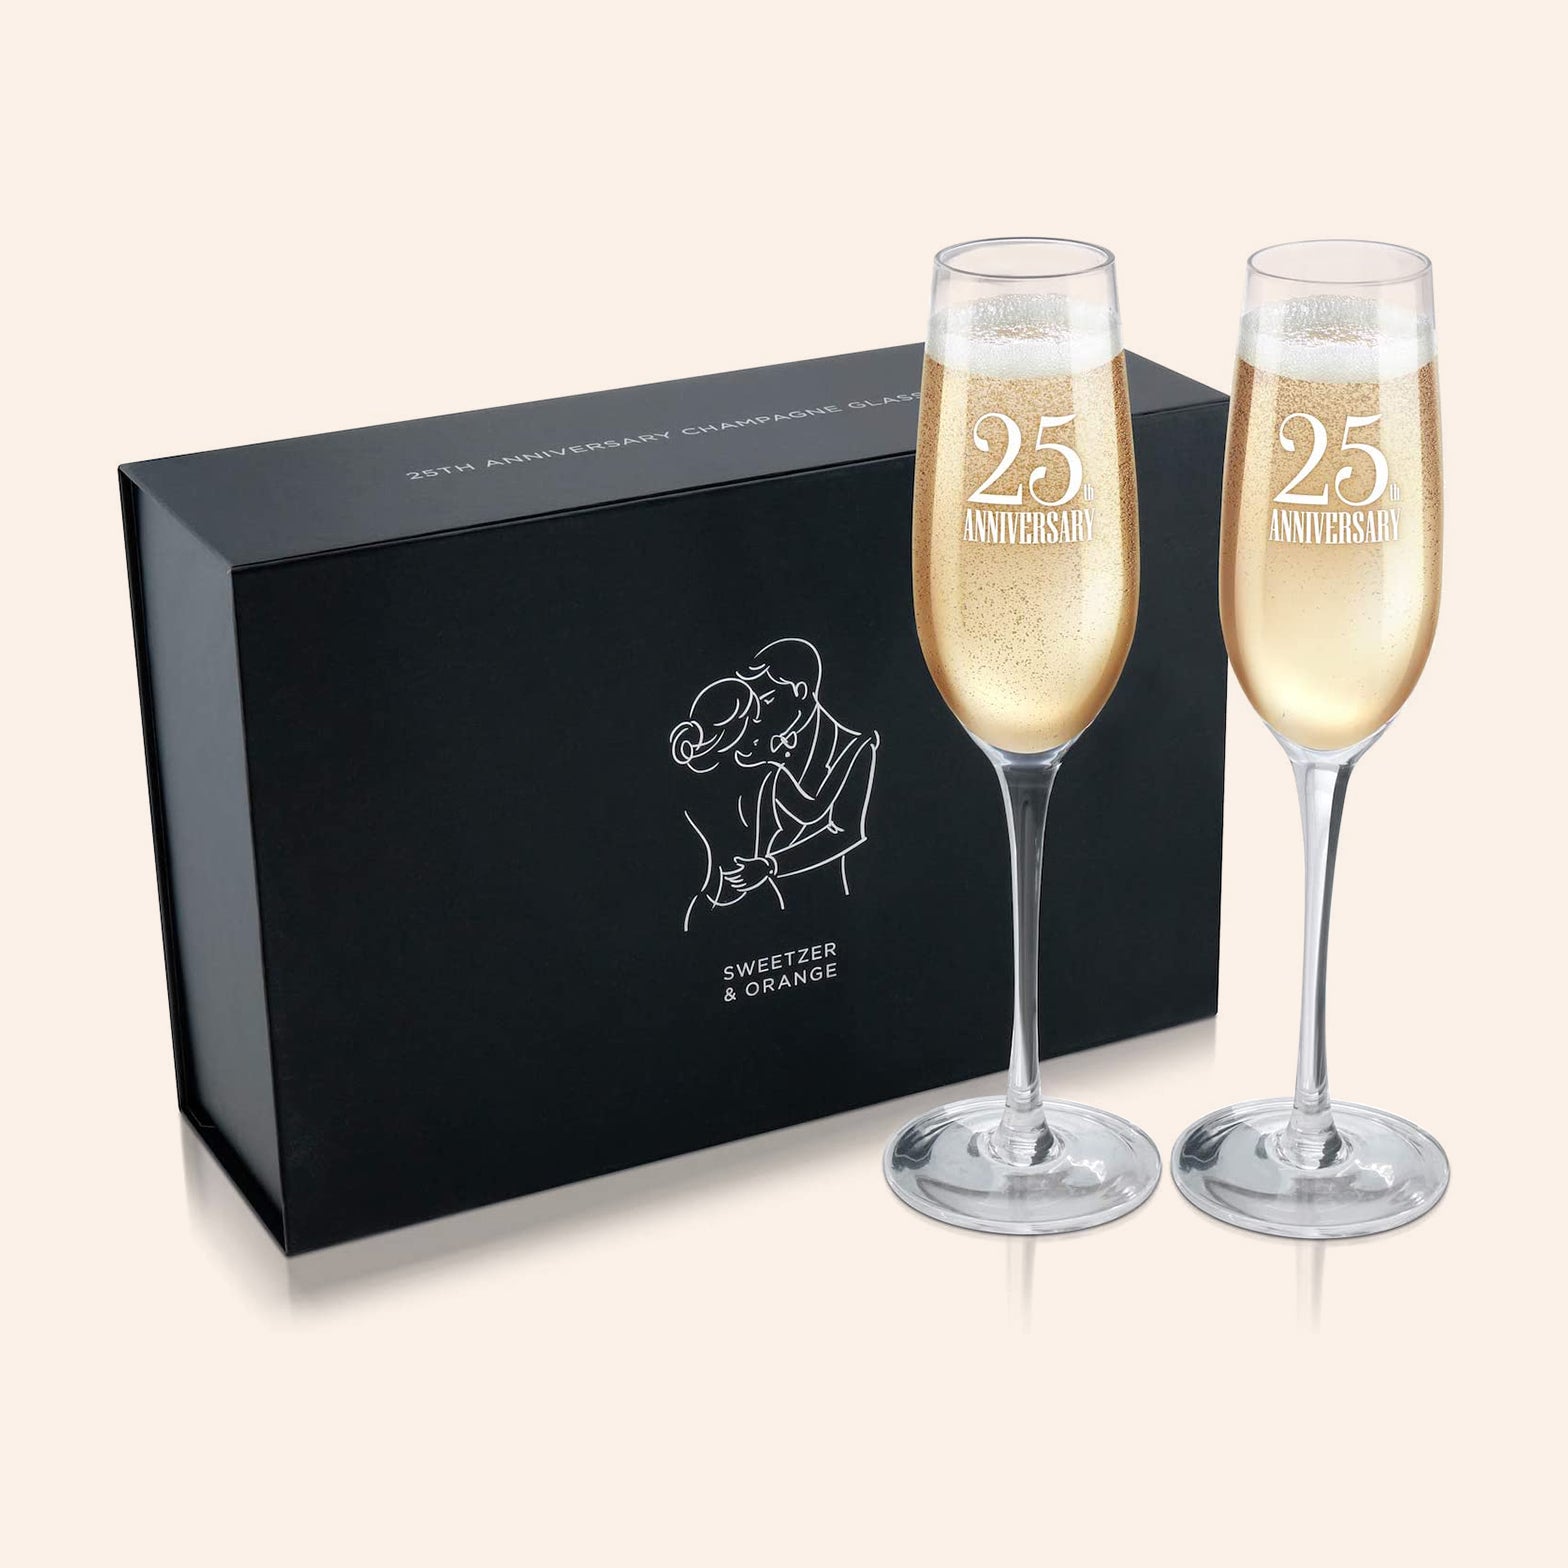 25th Anniversary Champagne Glasses